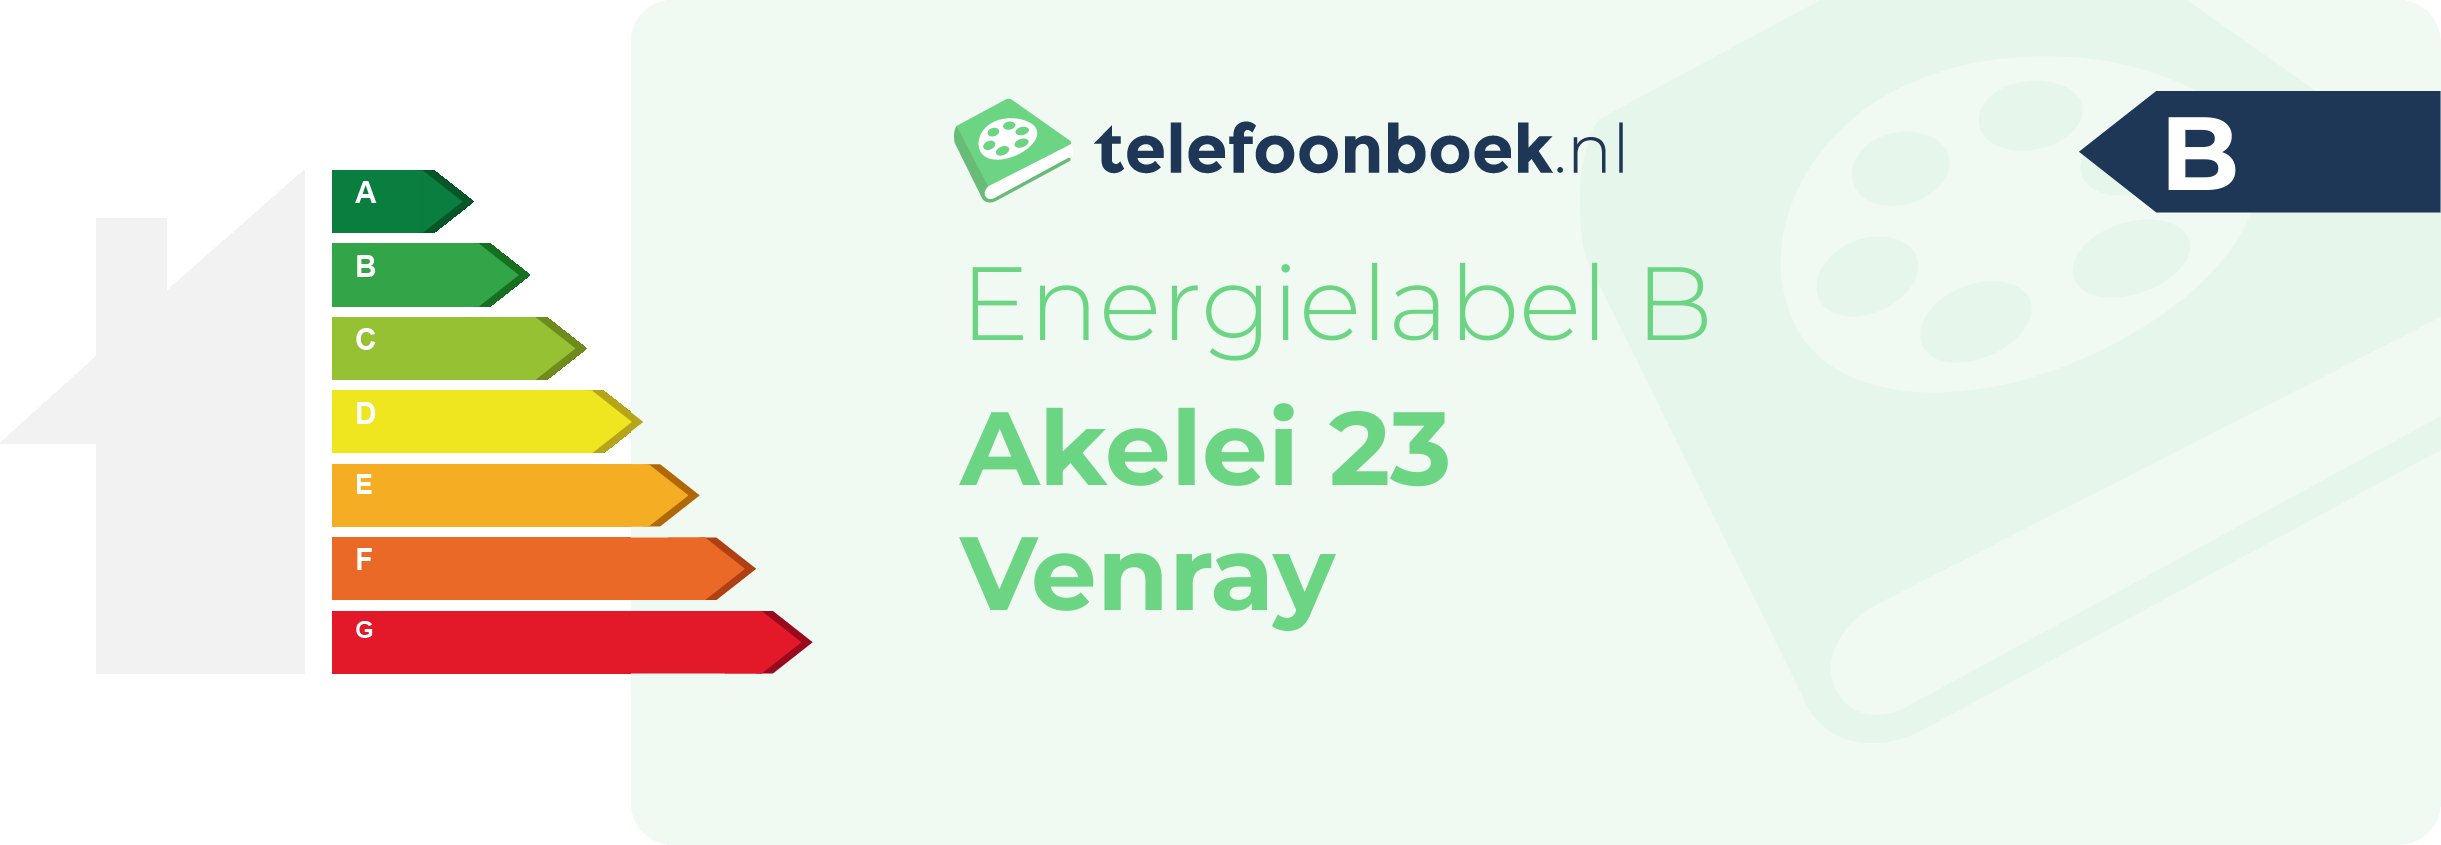 Energielabel Akelei 23 Venray